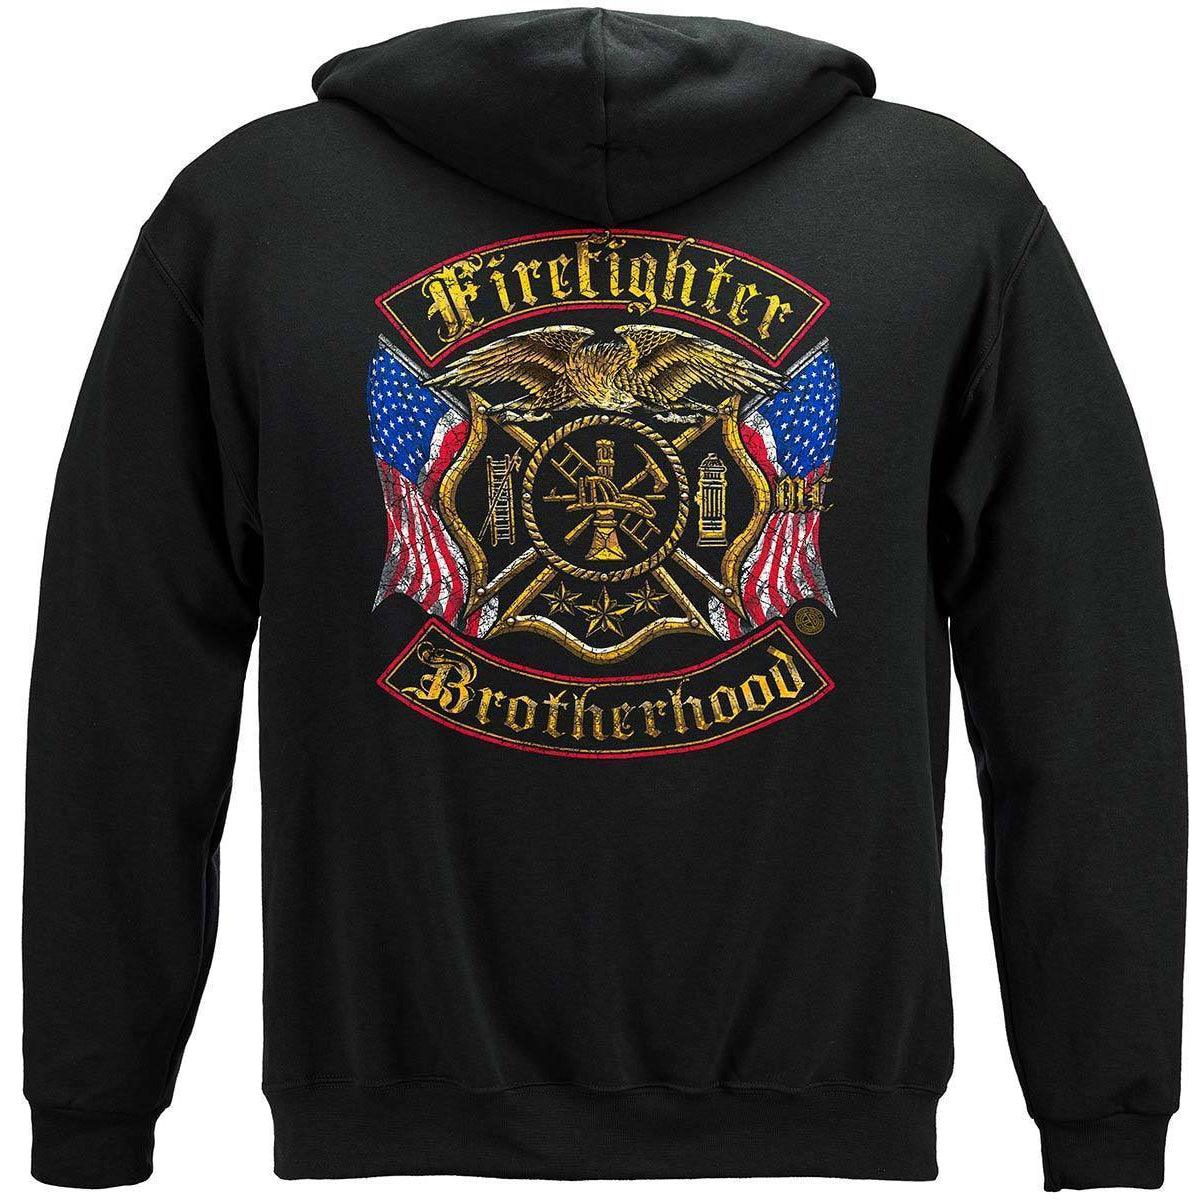 American Firefighter Brotherhood Hoodie - Military Republic